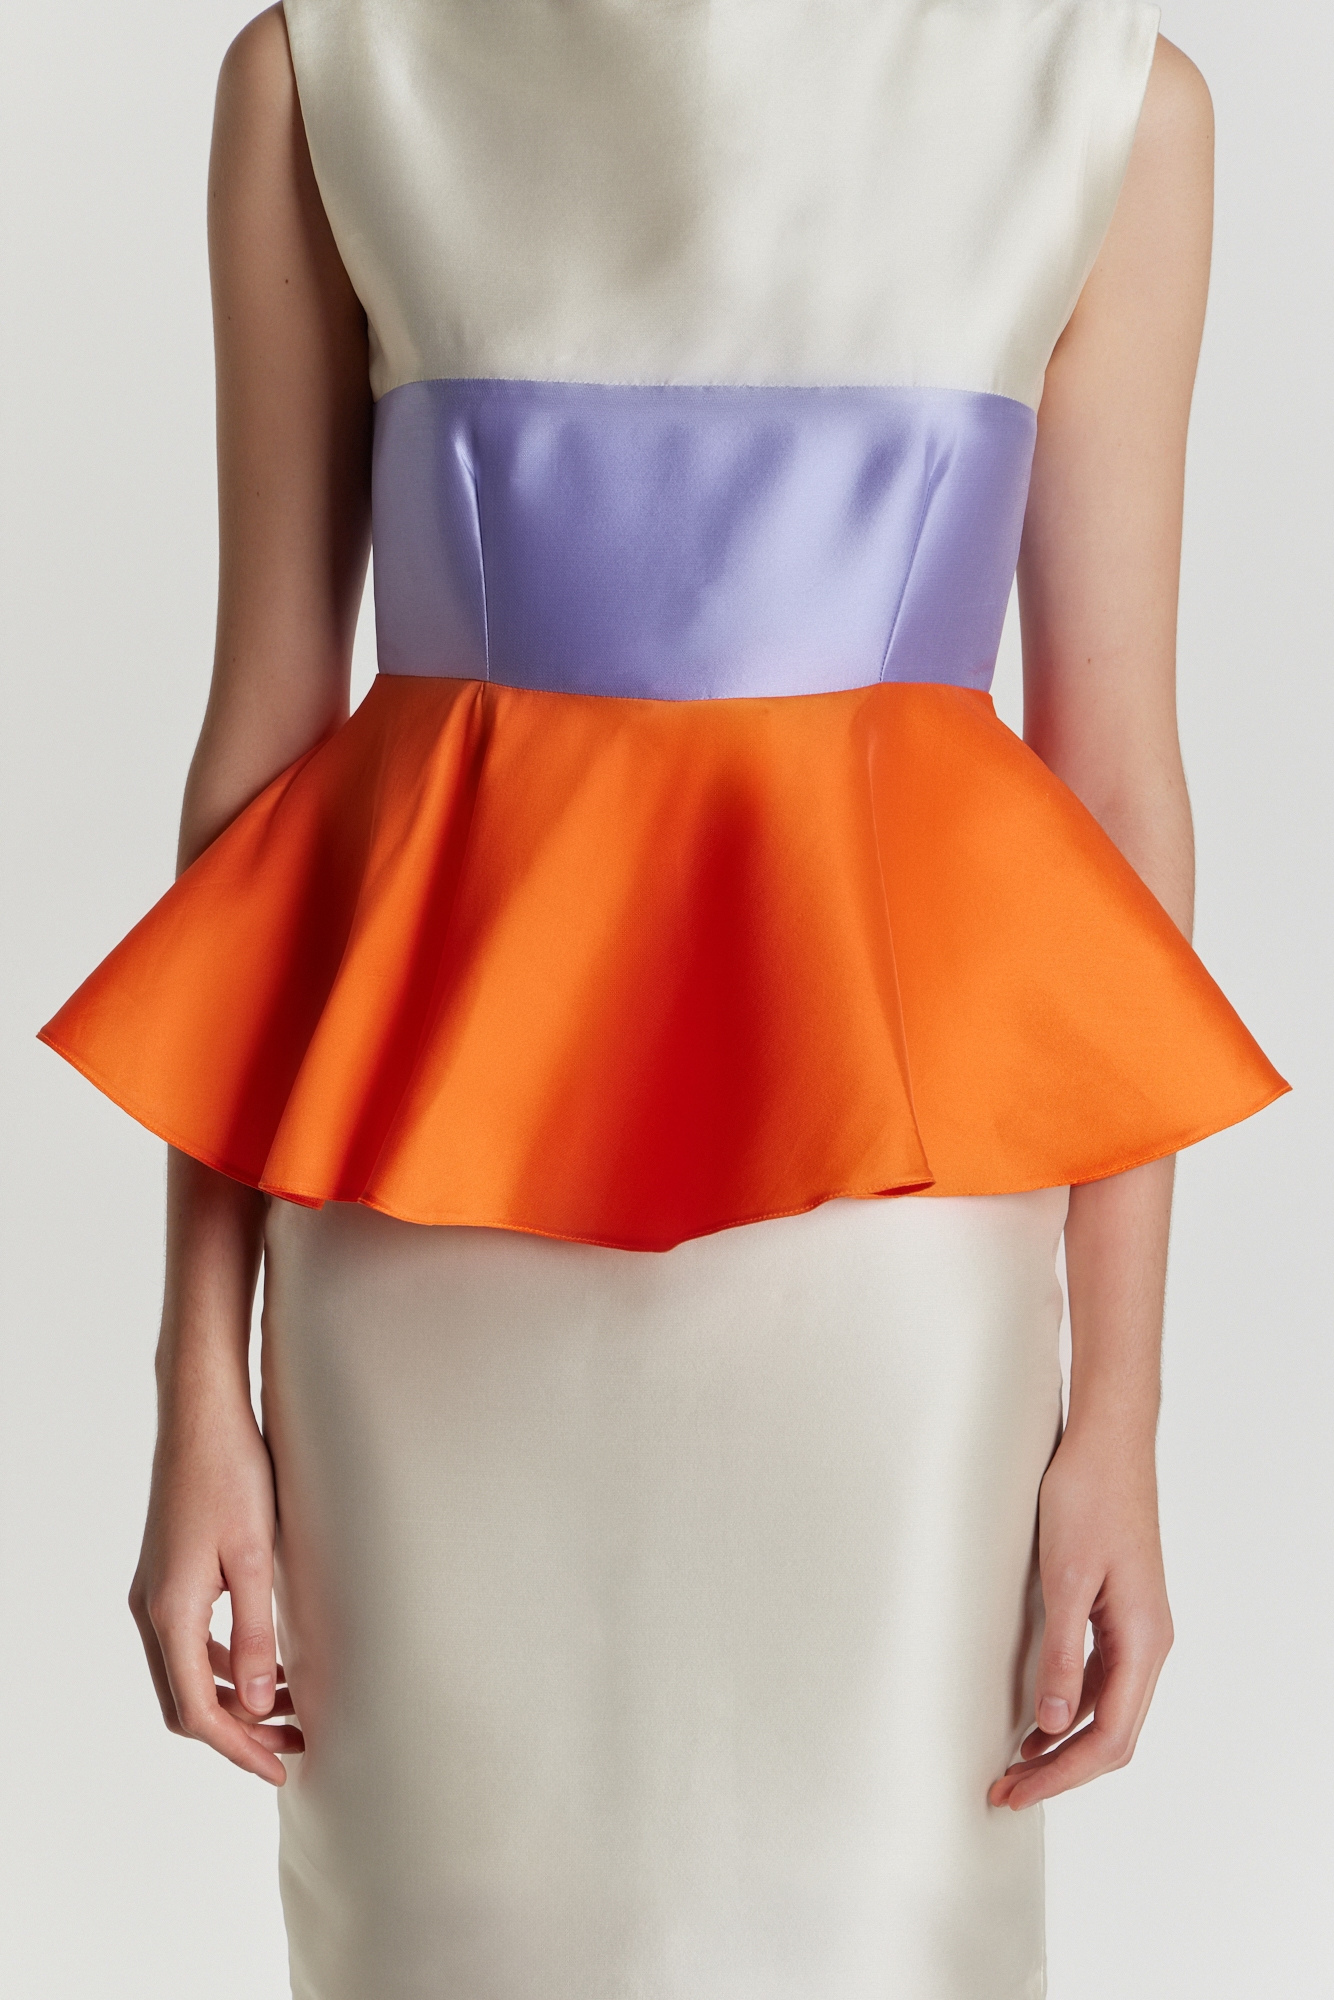 WHITE, ORANGE & LILAC Colorblock Peplum Midi Dress